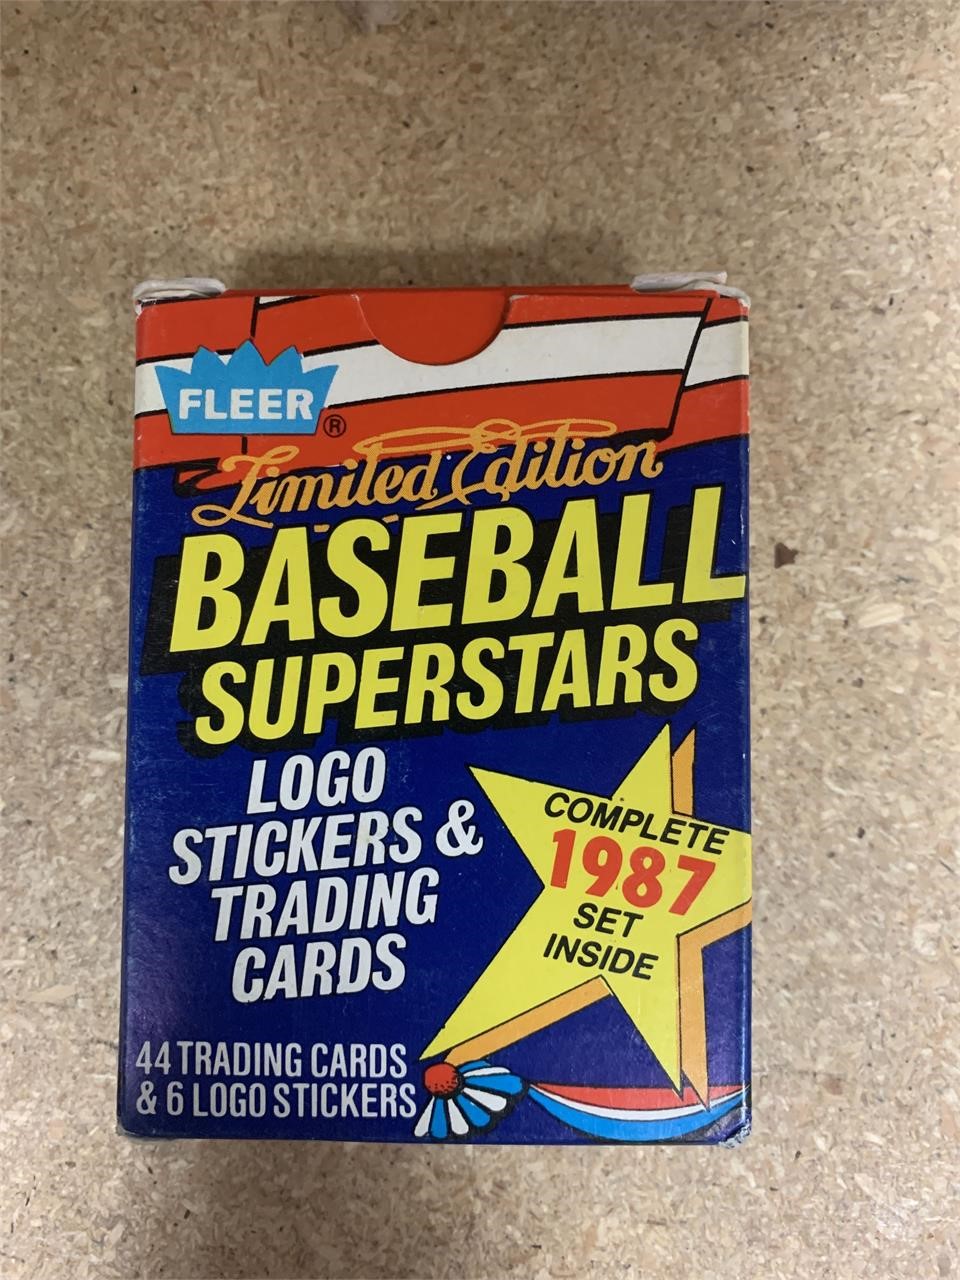 Fleer 1987 Baseball Superstars card set